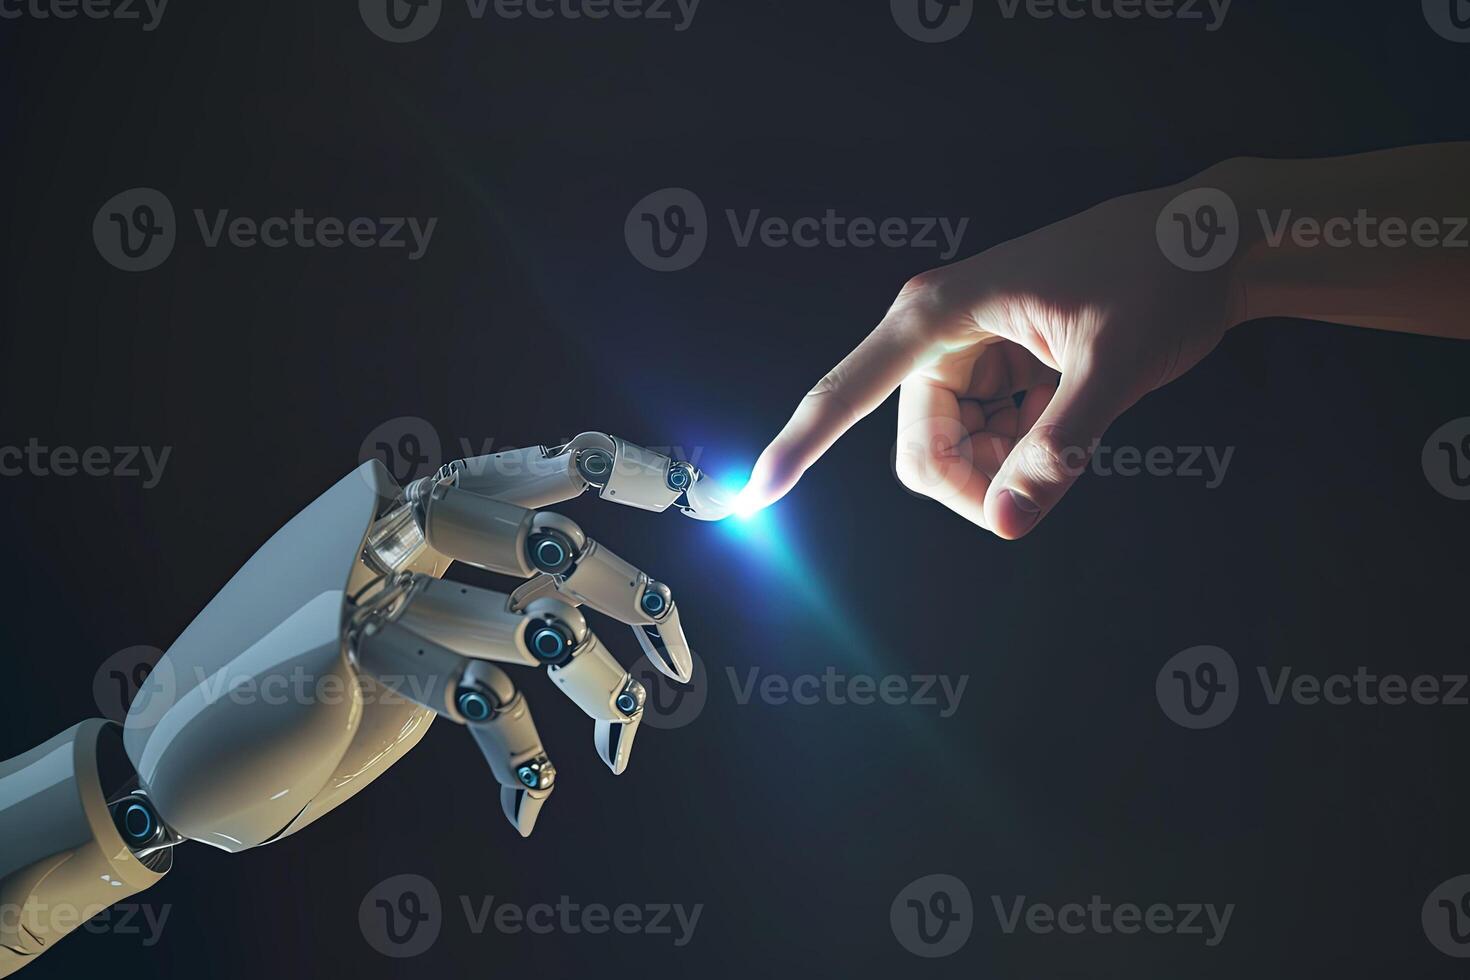 ai gerado a humano dedo delicadamente tocou a metal dedo do a robô. a conceito do a harmonioso coexistência do humanos e ai tecnologia foto